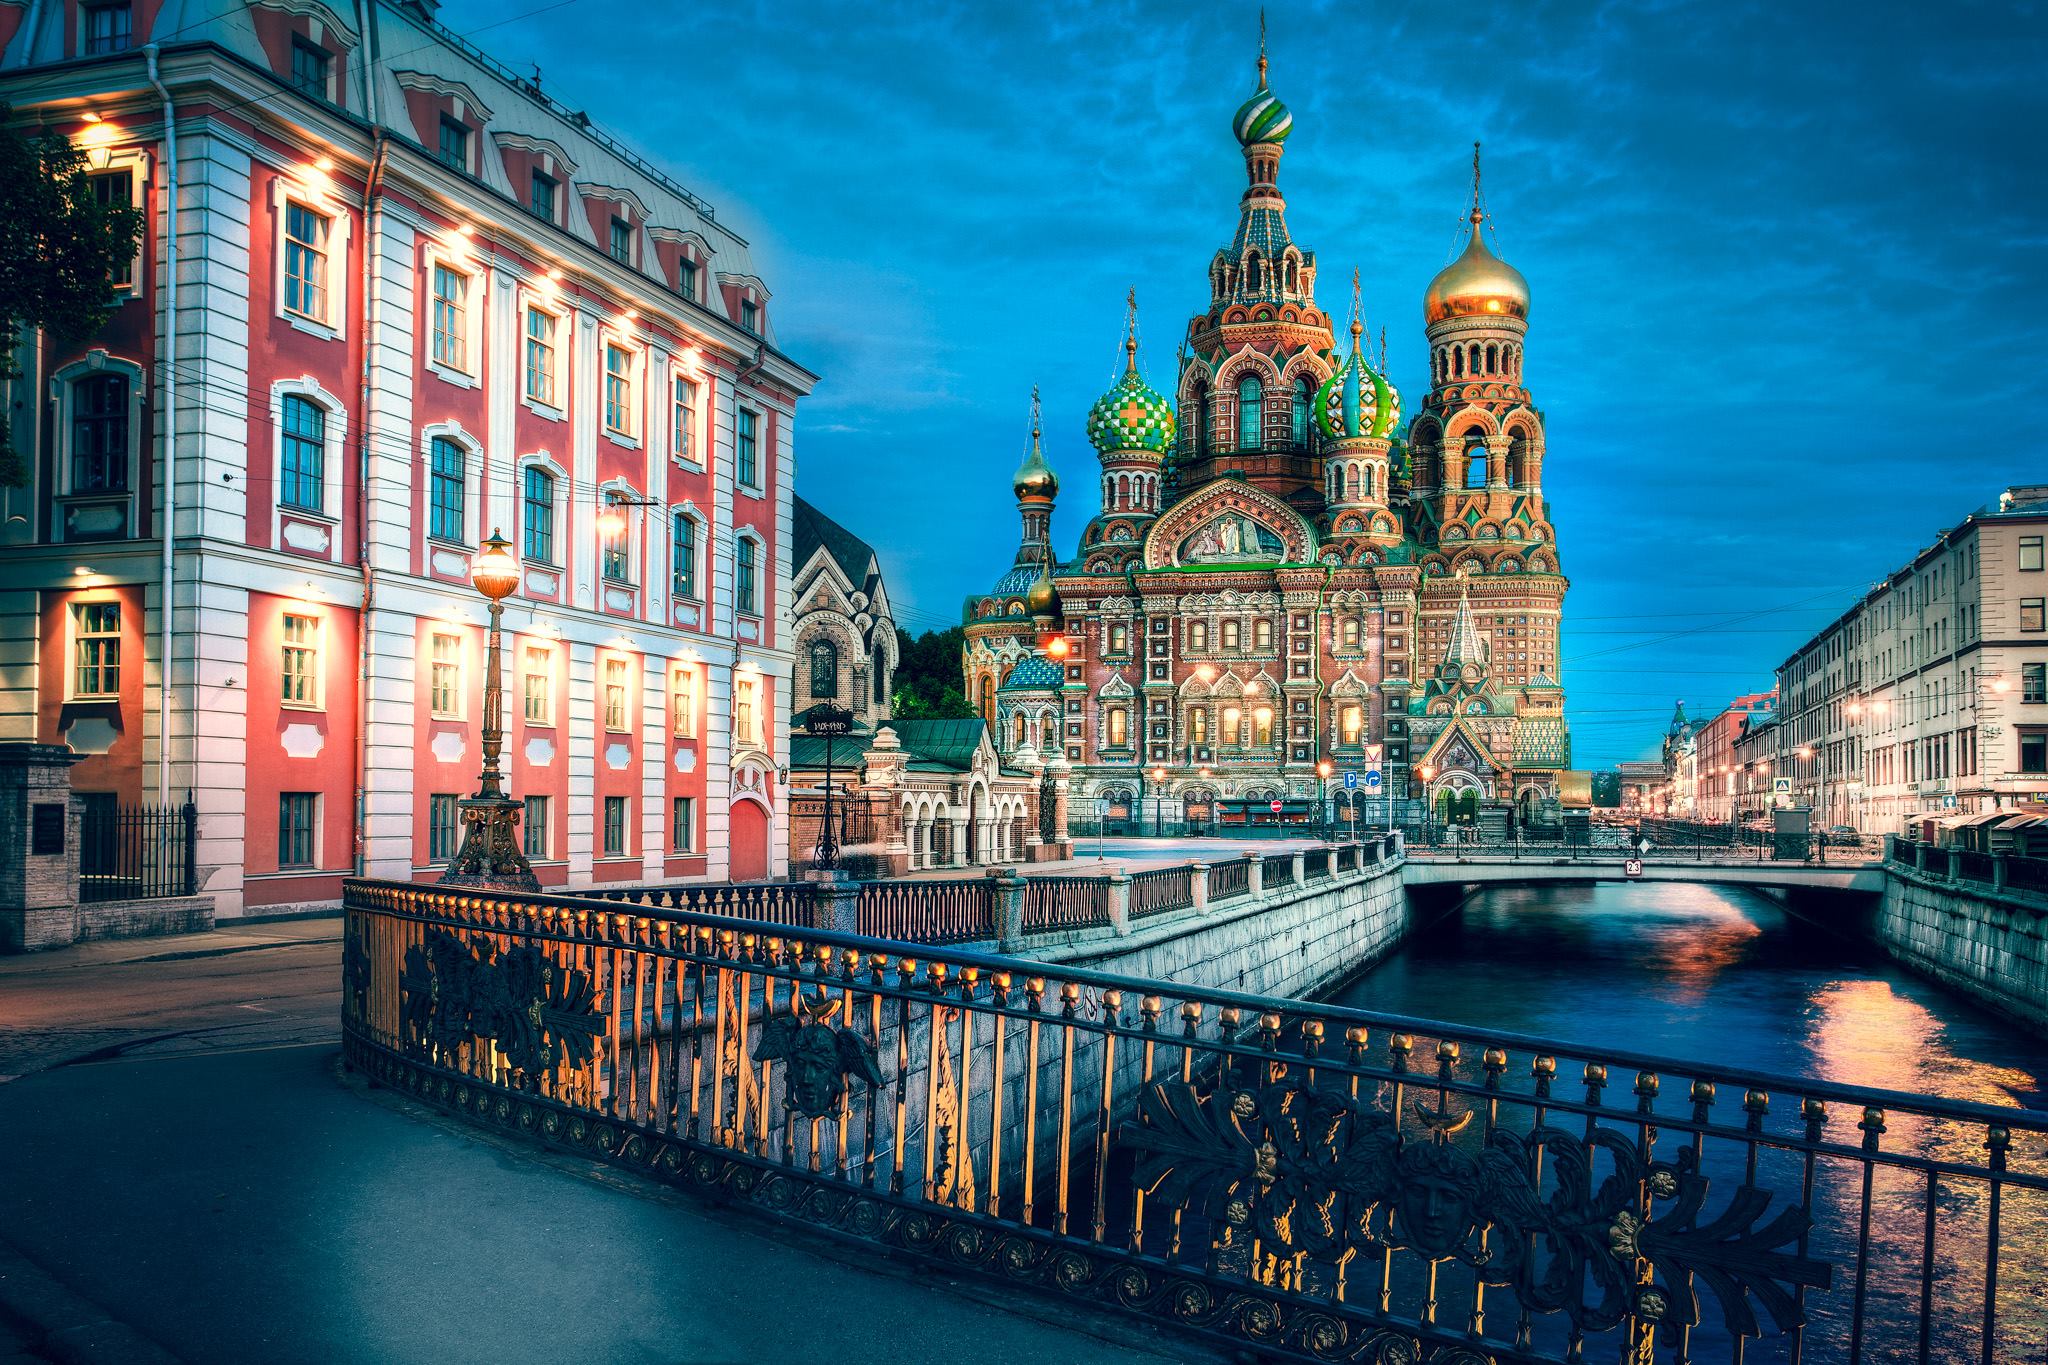 St. Petersburg, Russia - intoBaltics